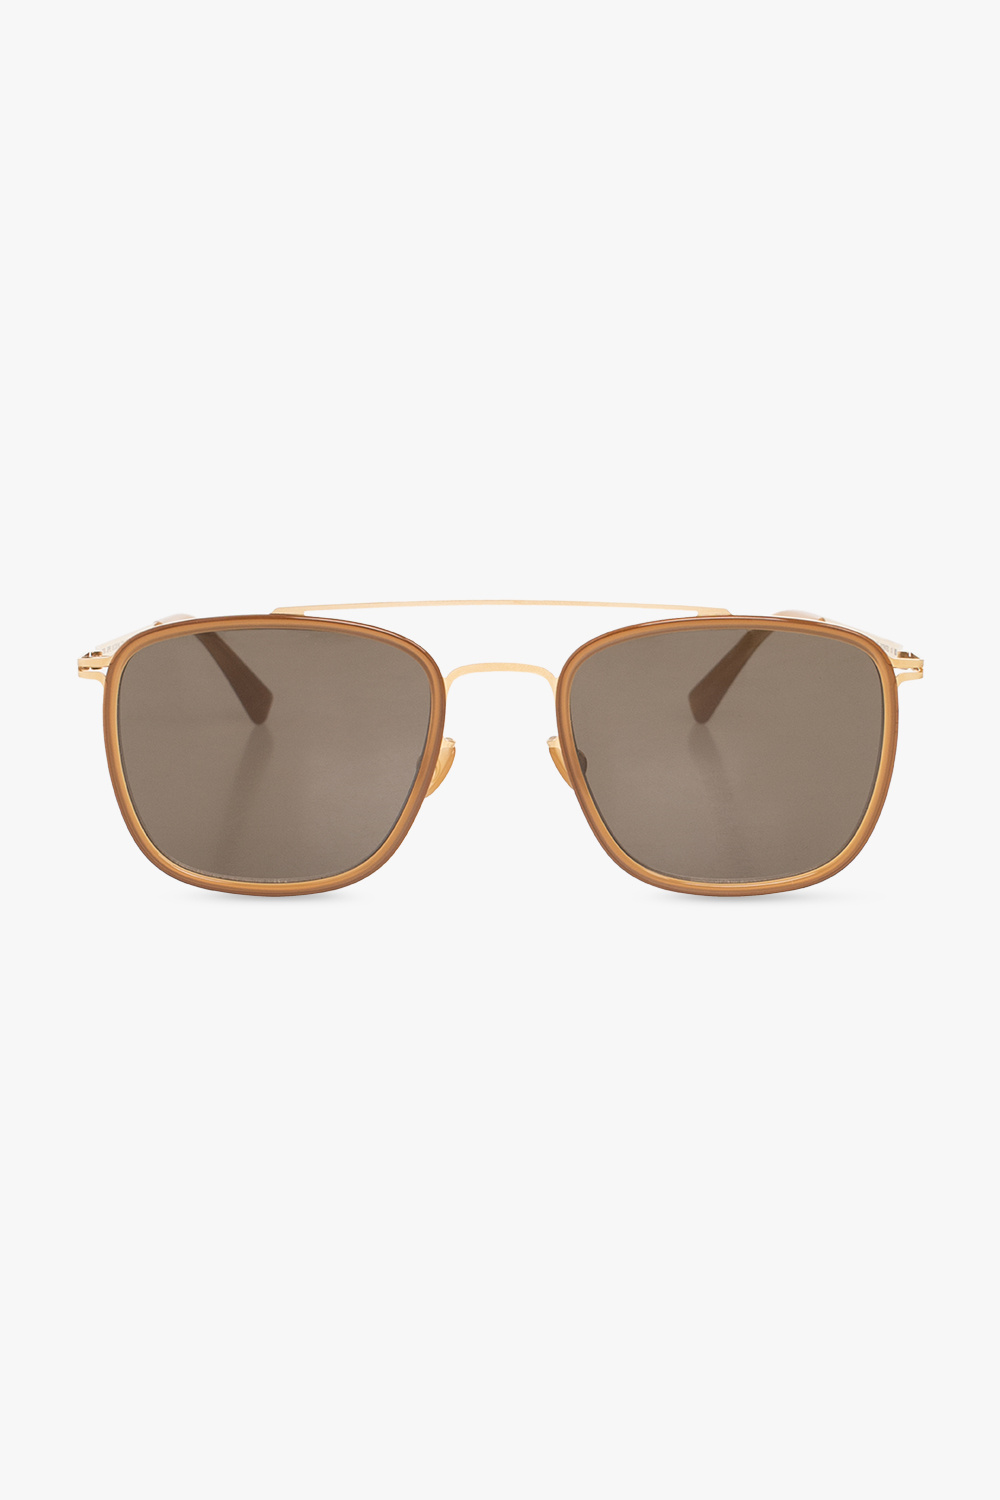 Mykita ‘Jeppe’ sunglasses